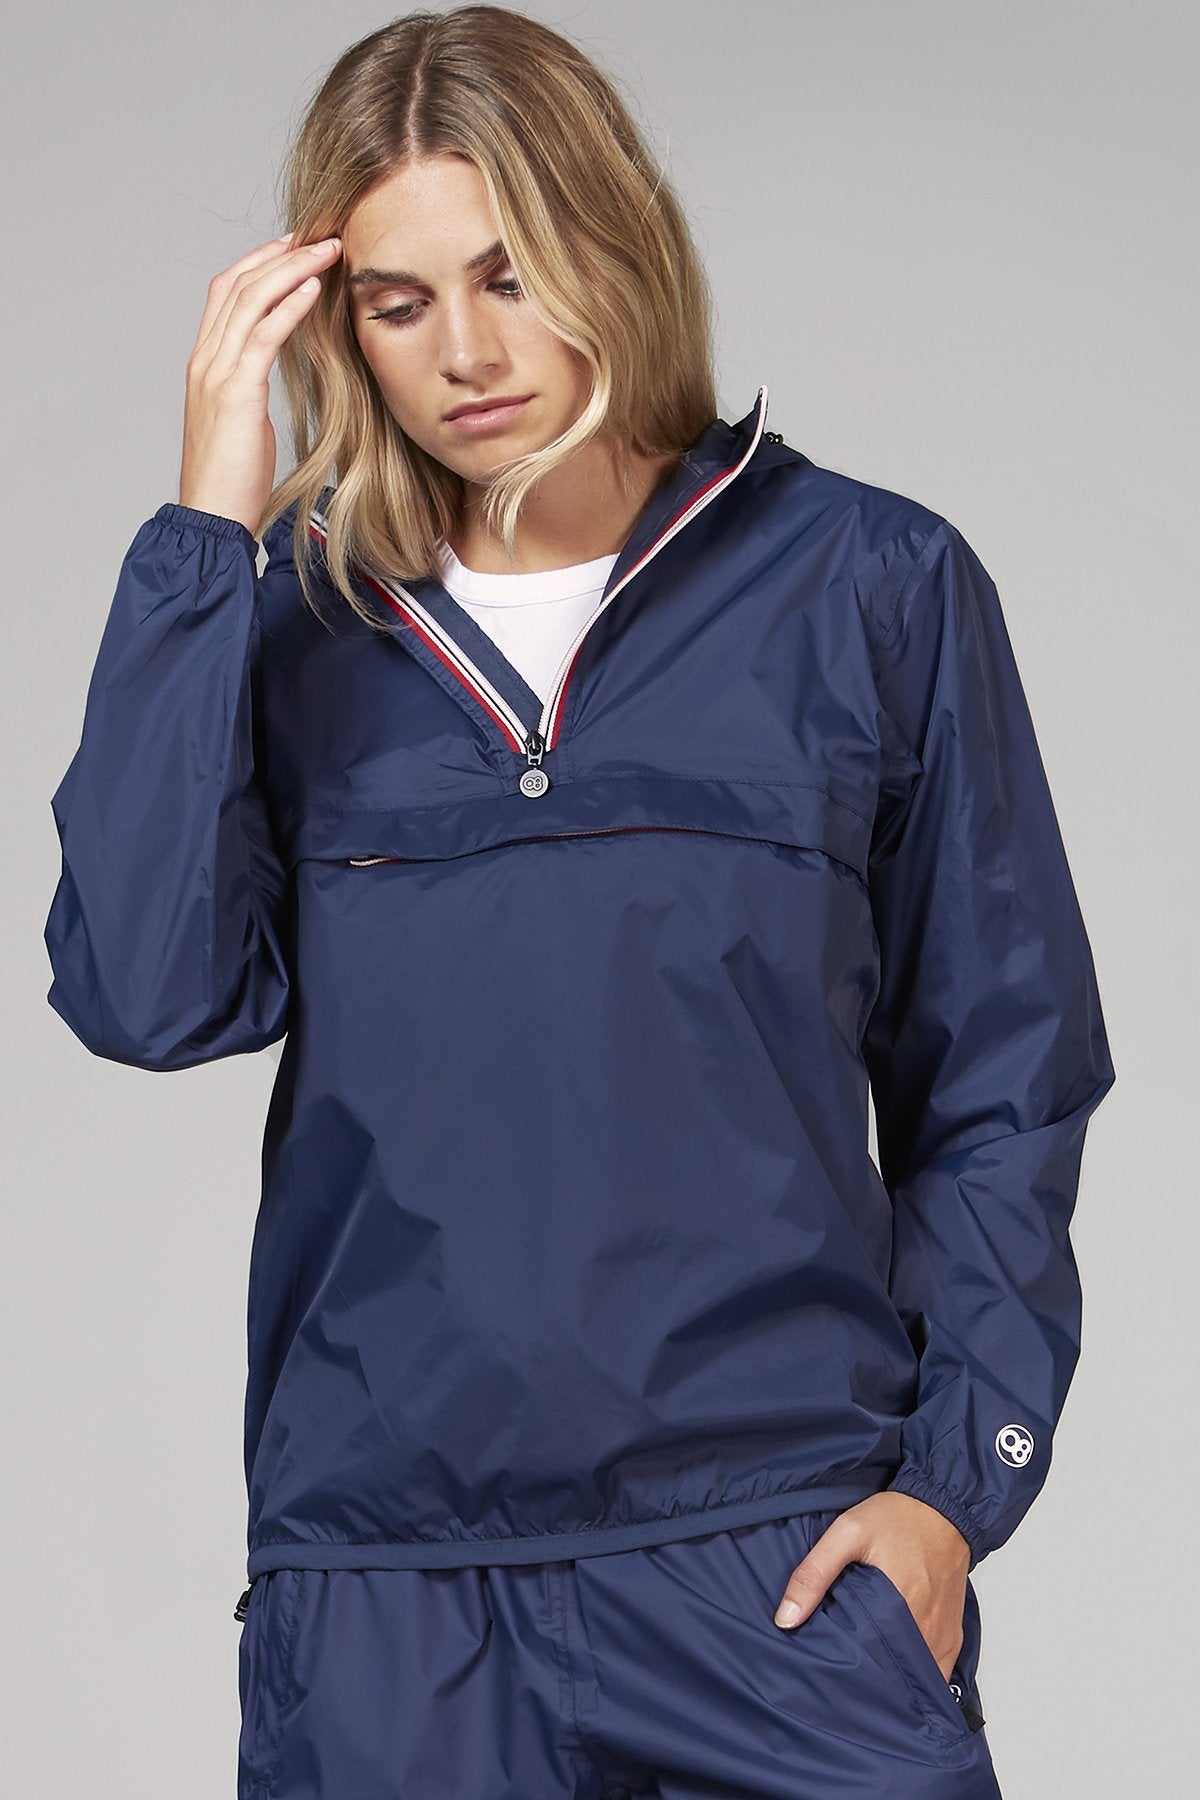 Picture of a Women's Quarter Zip Navy Blue Waterproof Rain Jacket front view